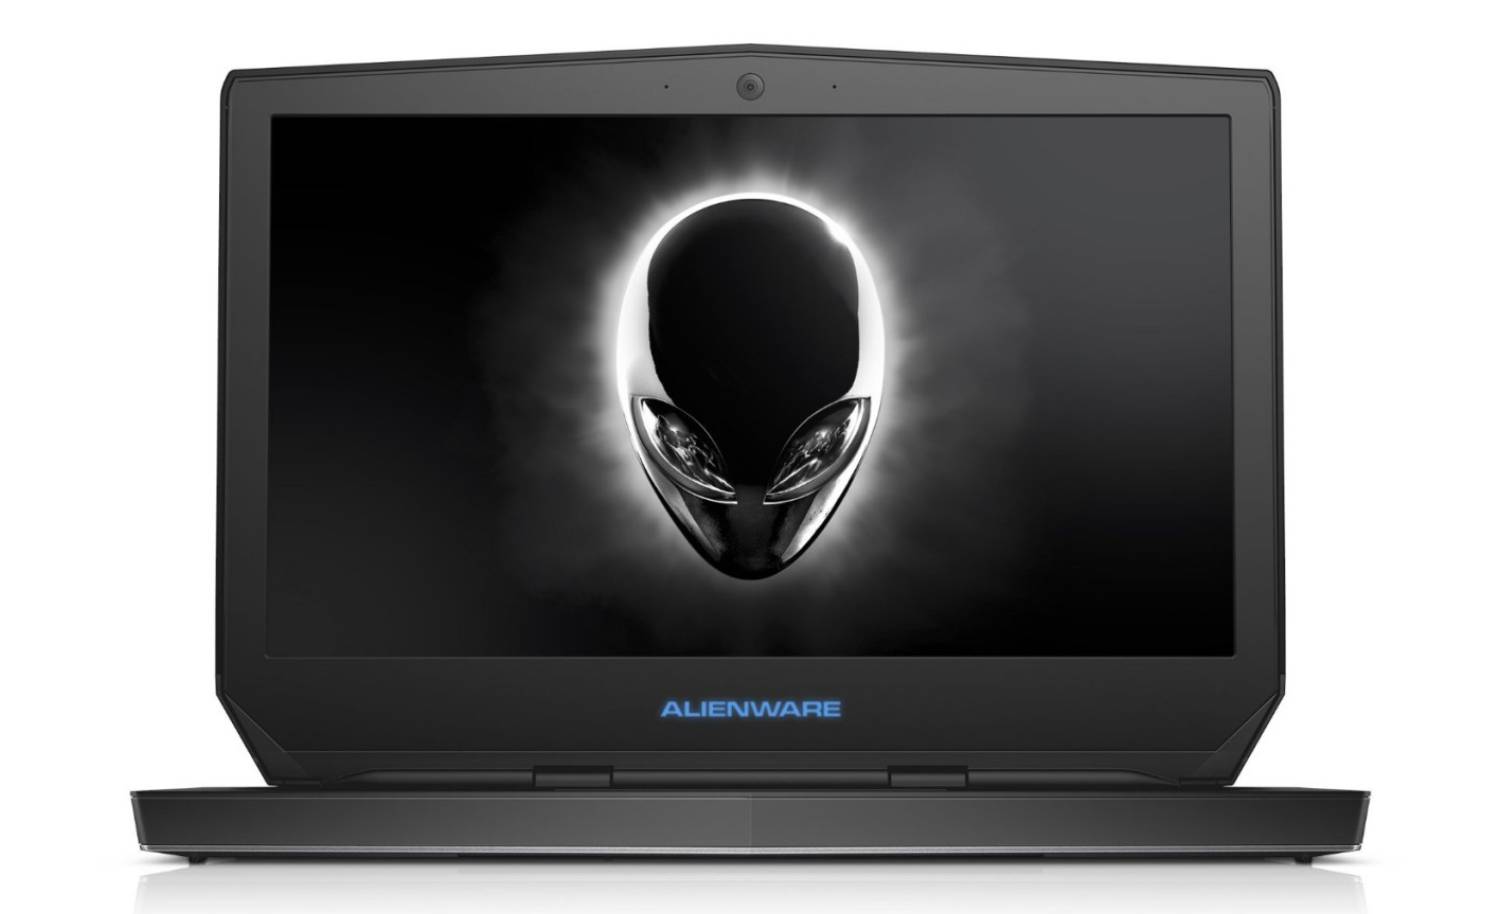 Alienware 13 R1 Intel Core i7 5th Gen 8GB RAM 256GB SSD Windows 10 Pro Nvidia GeForce GTX 960M